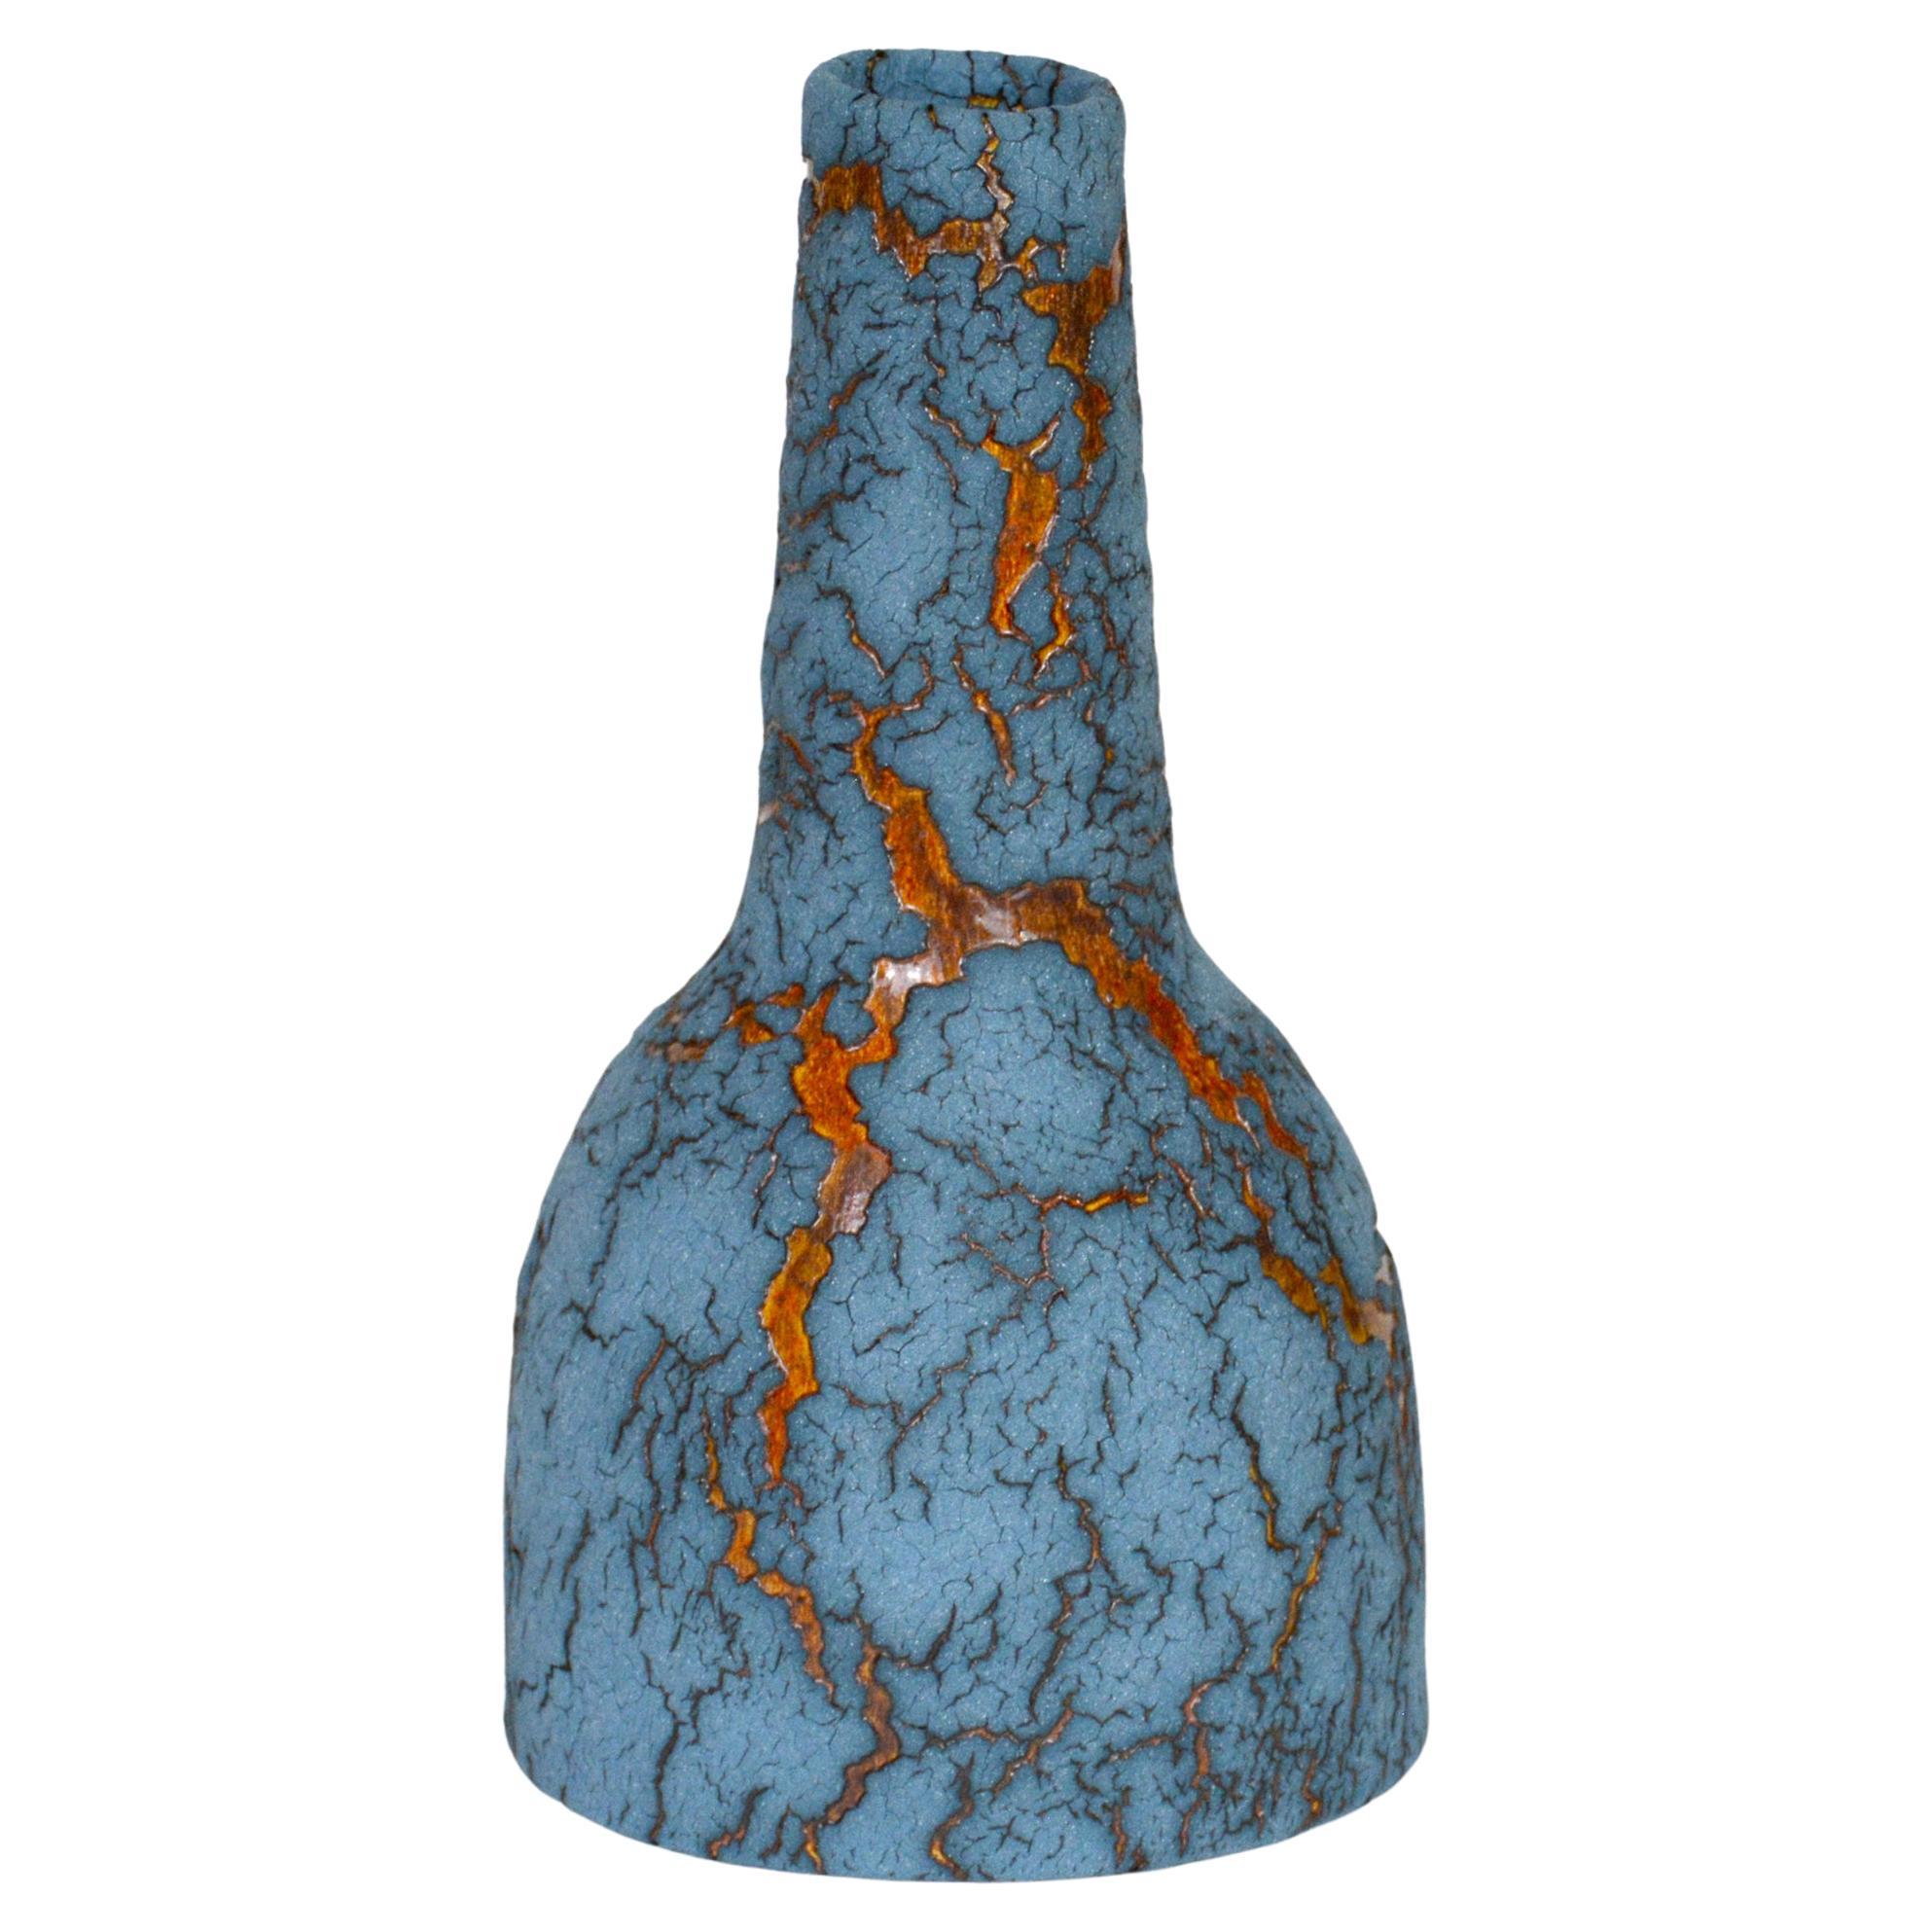 Ceramic Bottle, Decorative Vase by William Edwards.  Mid-Century Modern